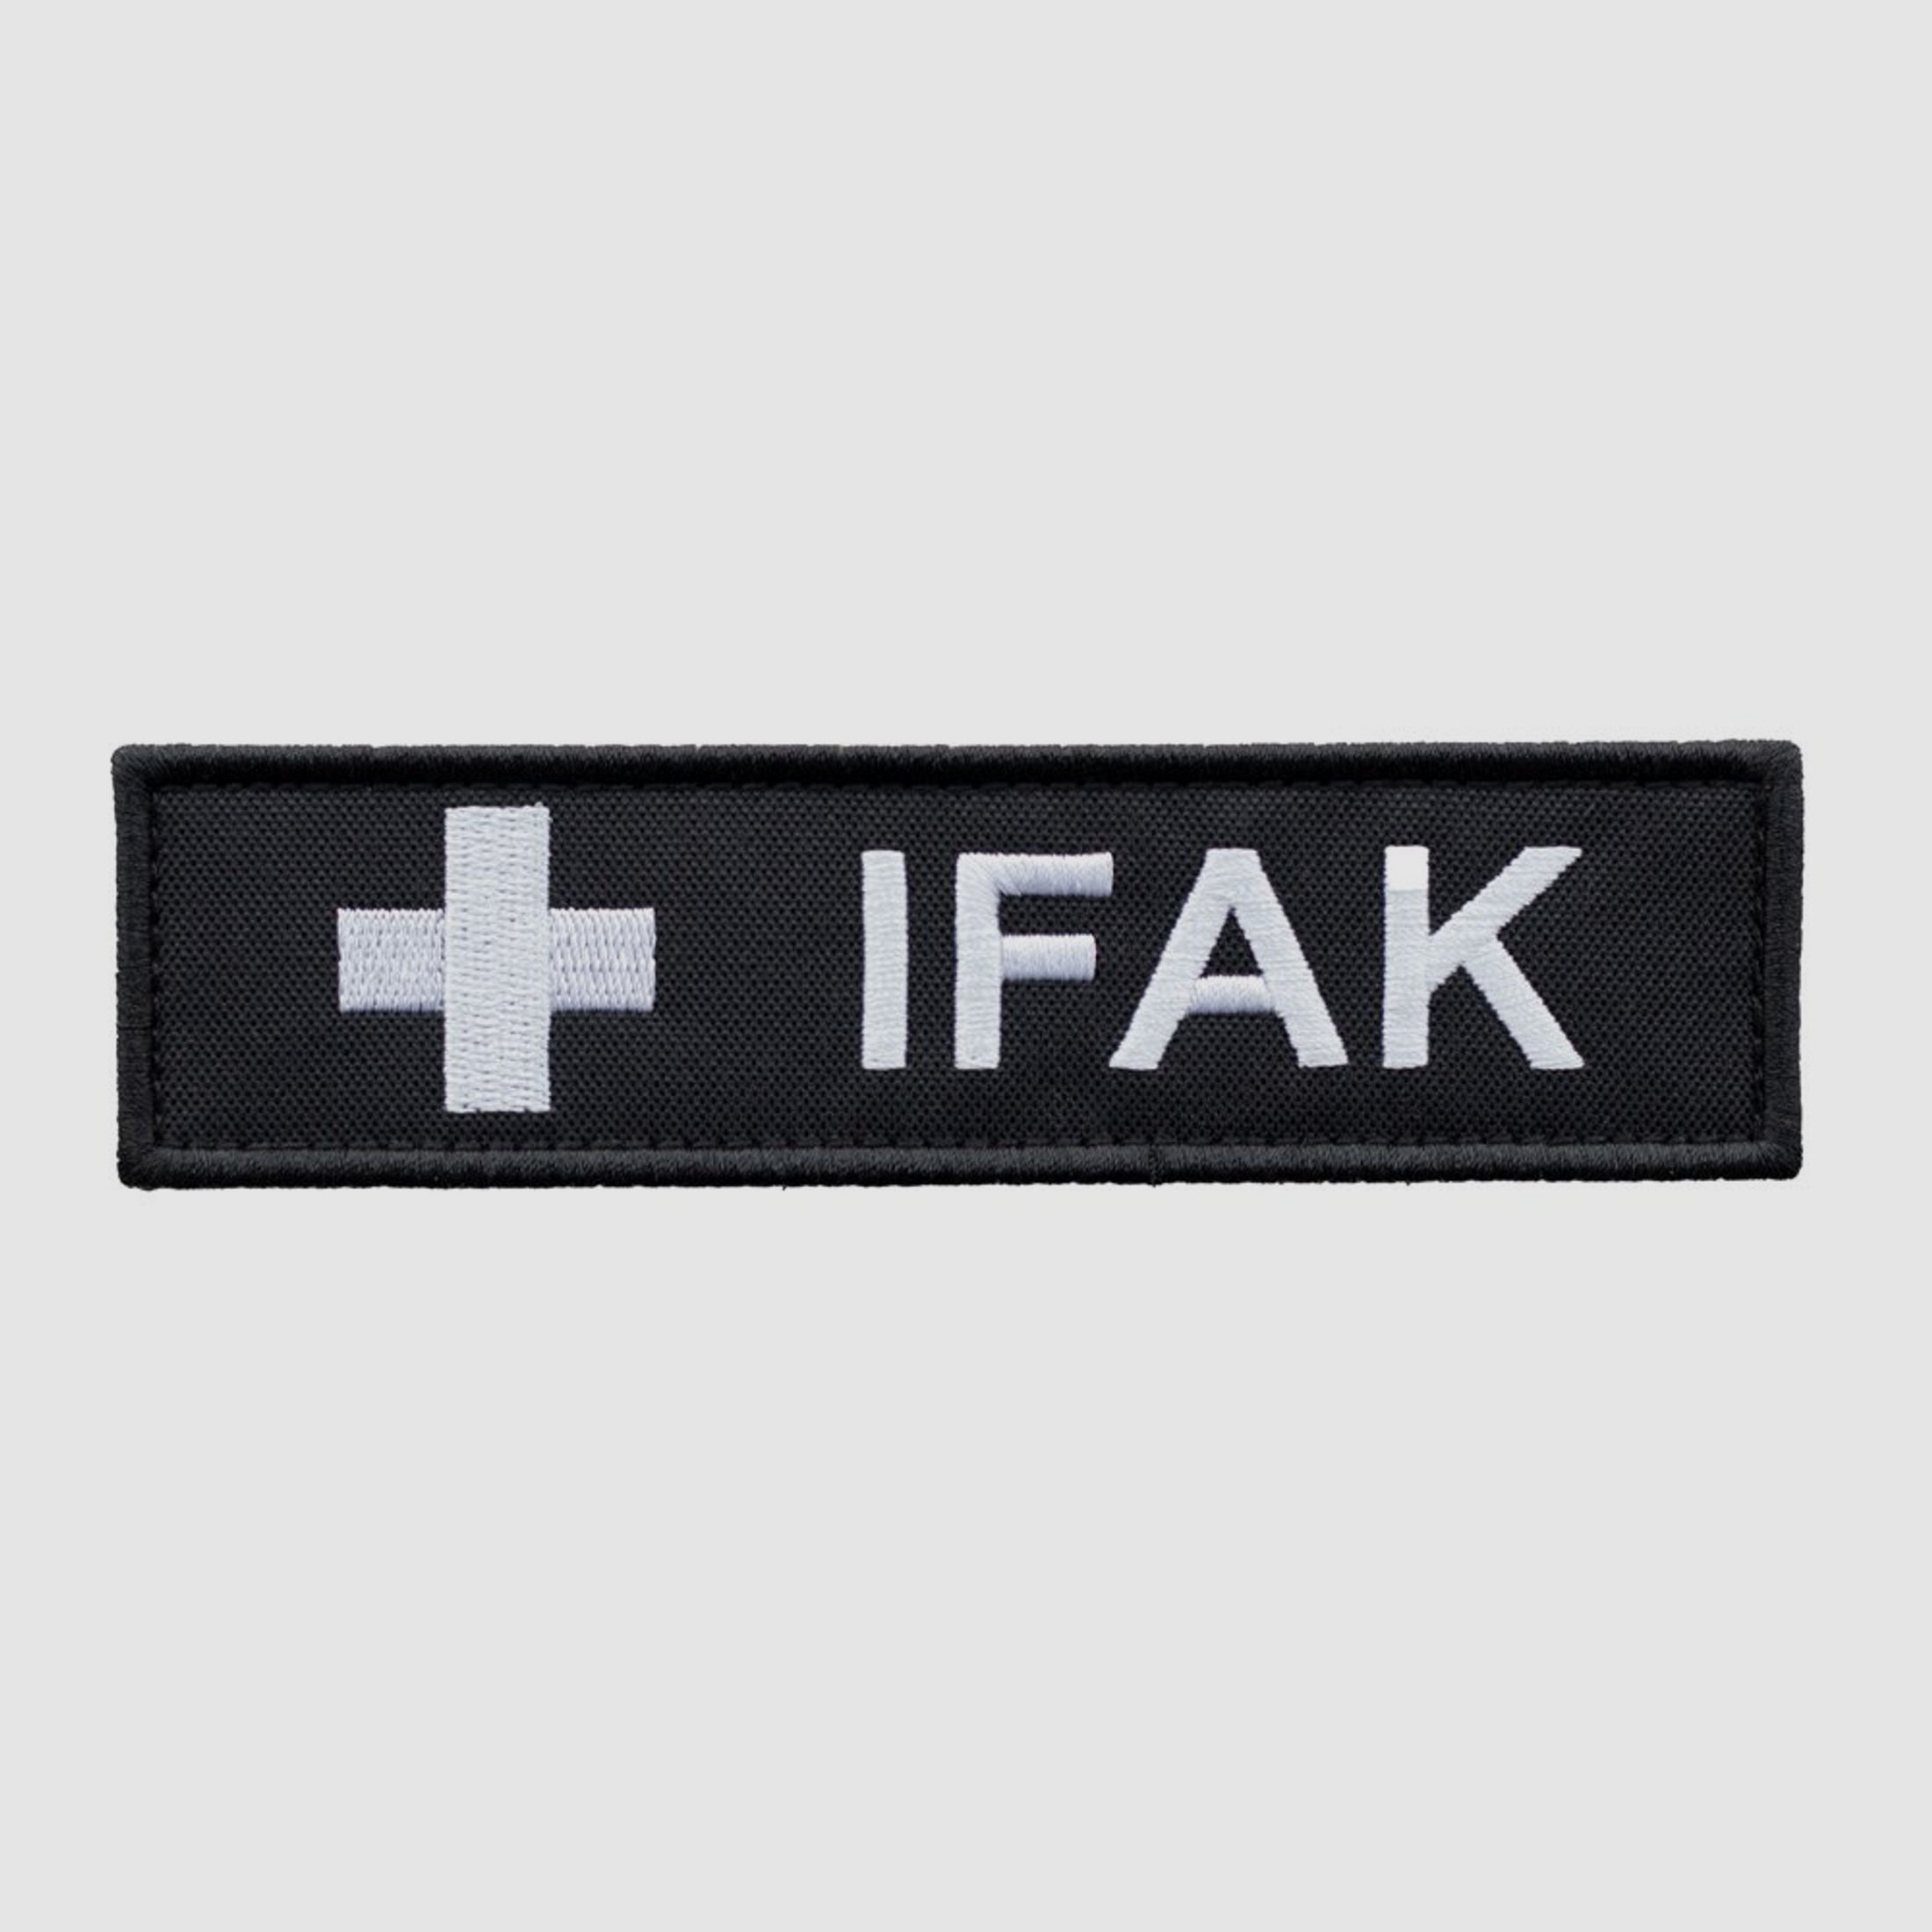 IFAK Stoff Patch - Gestickt 13,5 x 3,5 cm